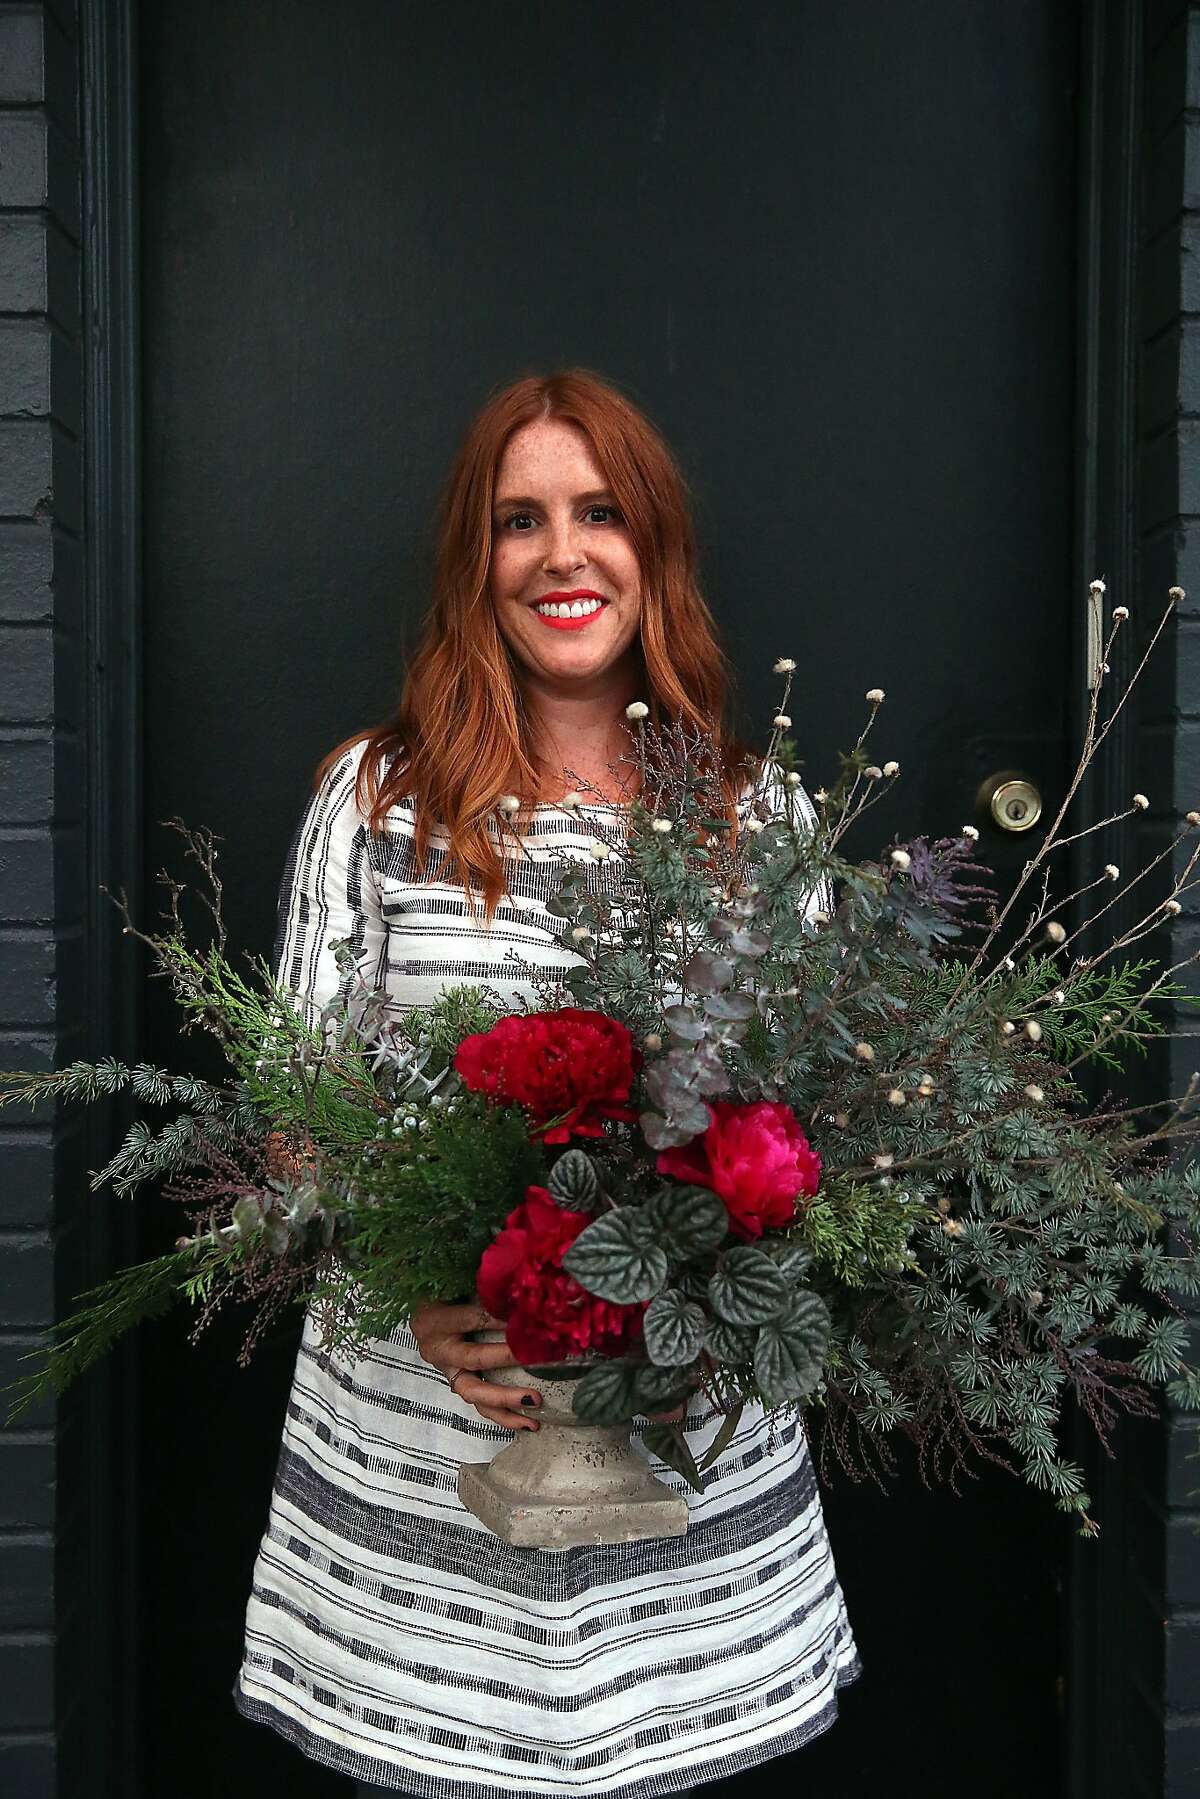 Designer Natalie Brookshire shows one of her arrangements in San Francisco, California, on Friday, December 4, 2015.